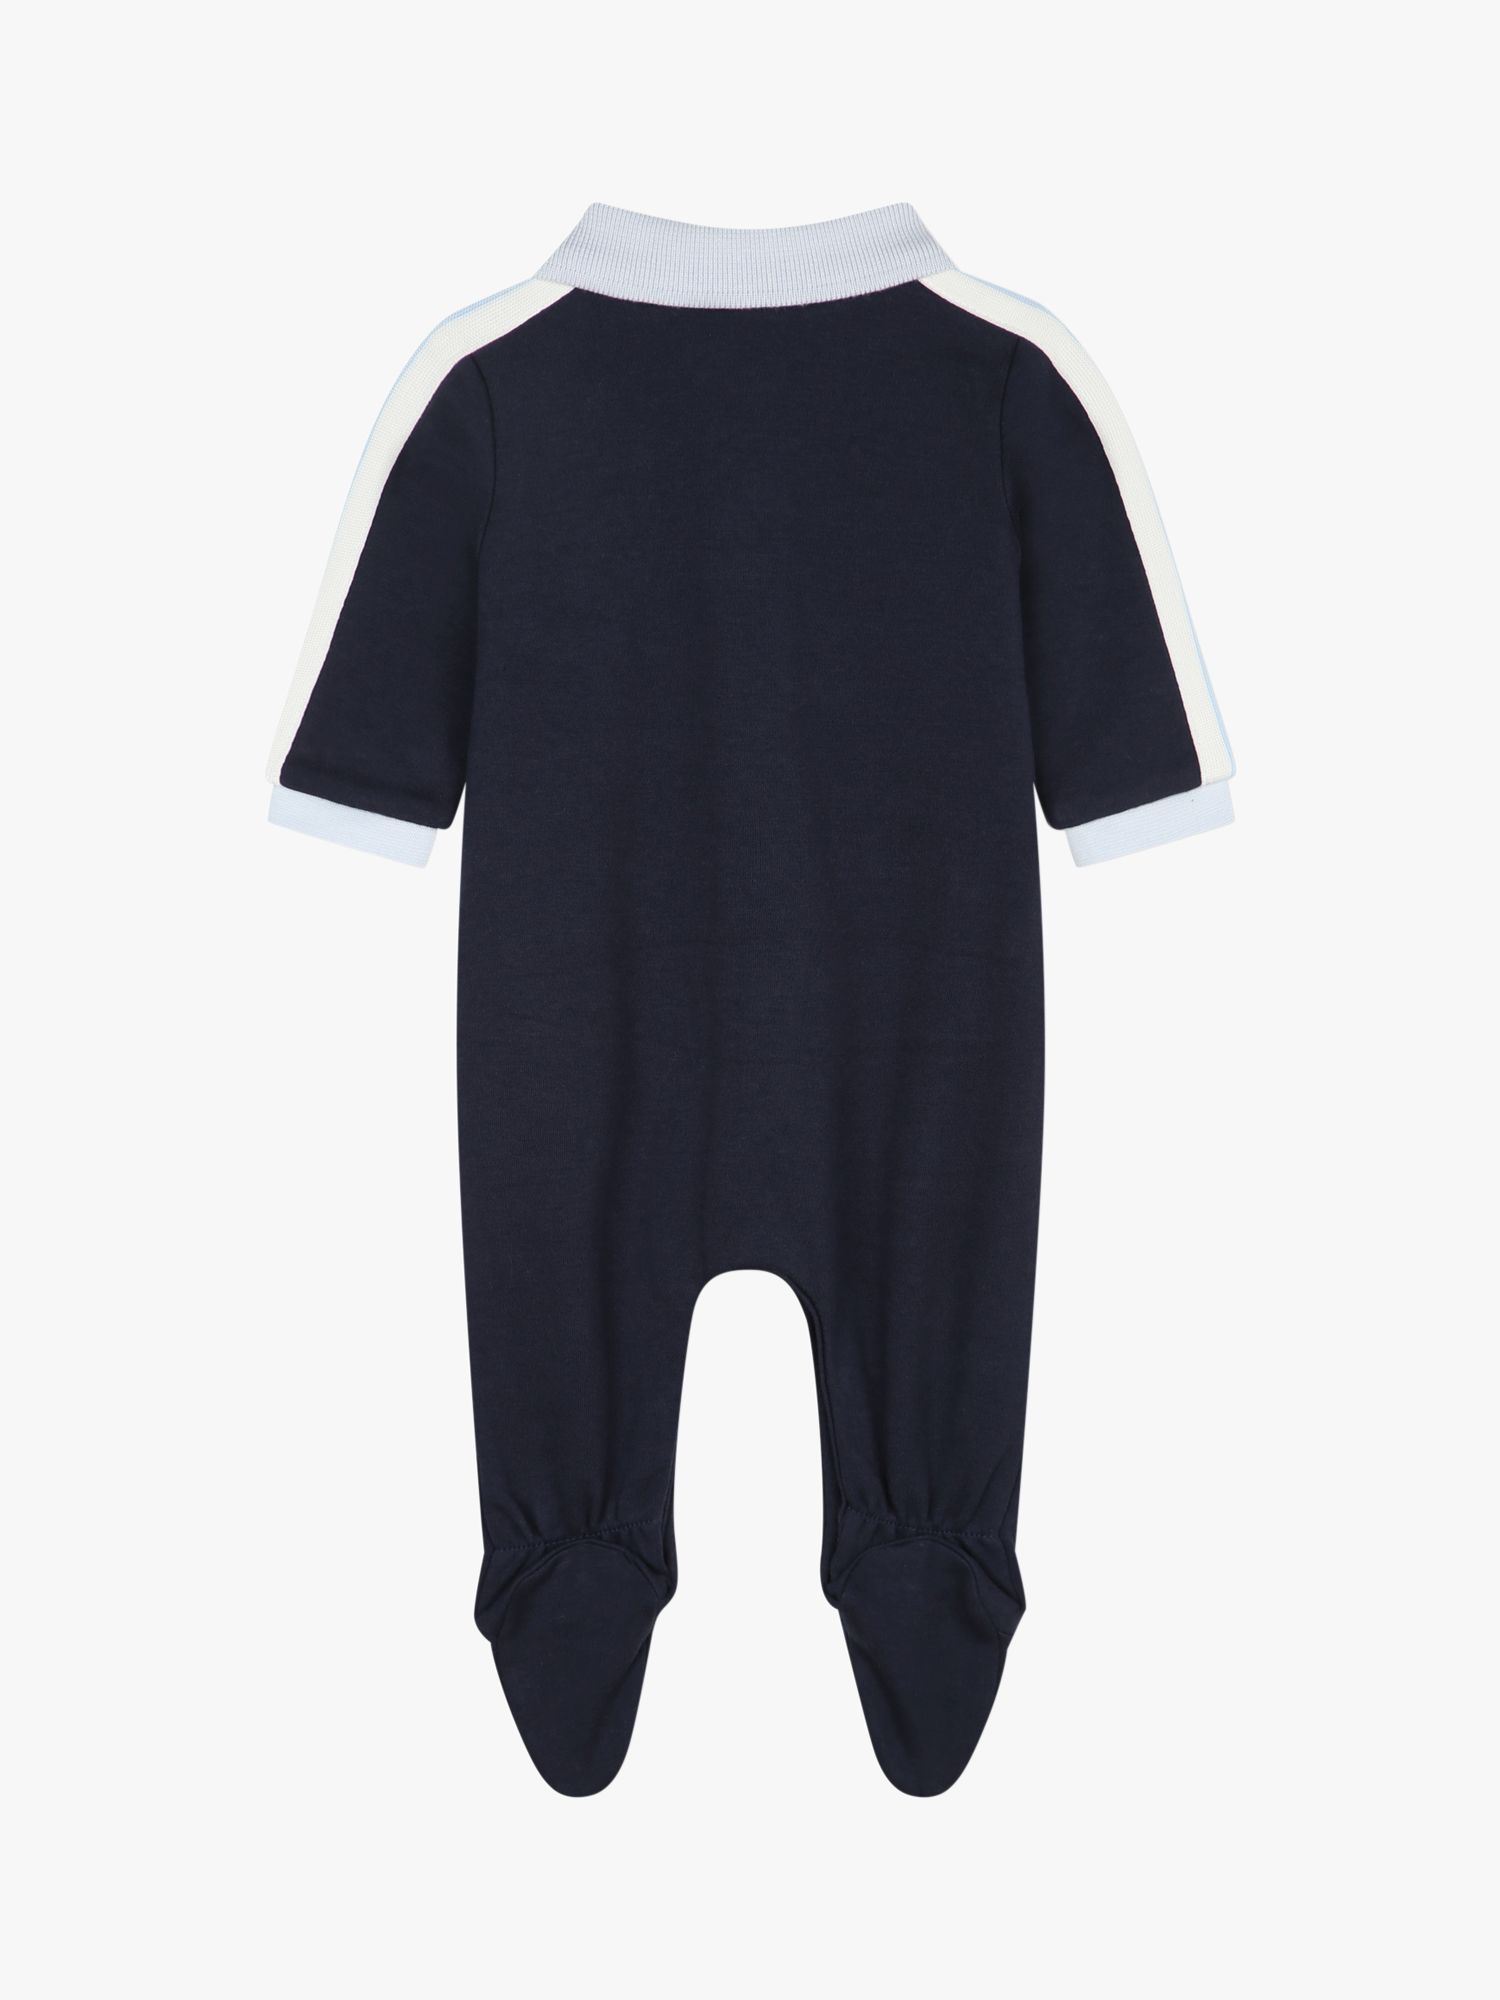 Buy BOSS Baby Collared Pyjamas, Black/White Online at johnlewis.com